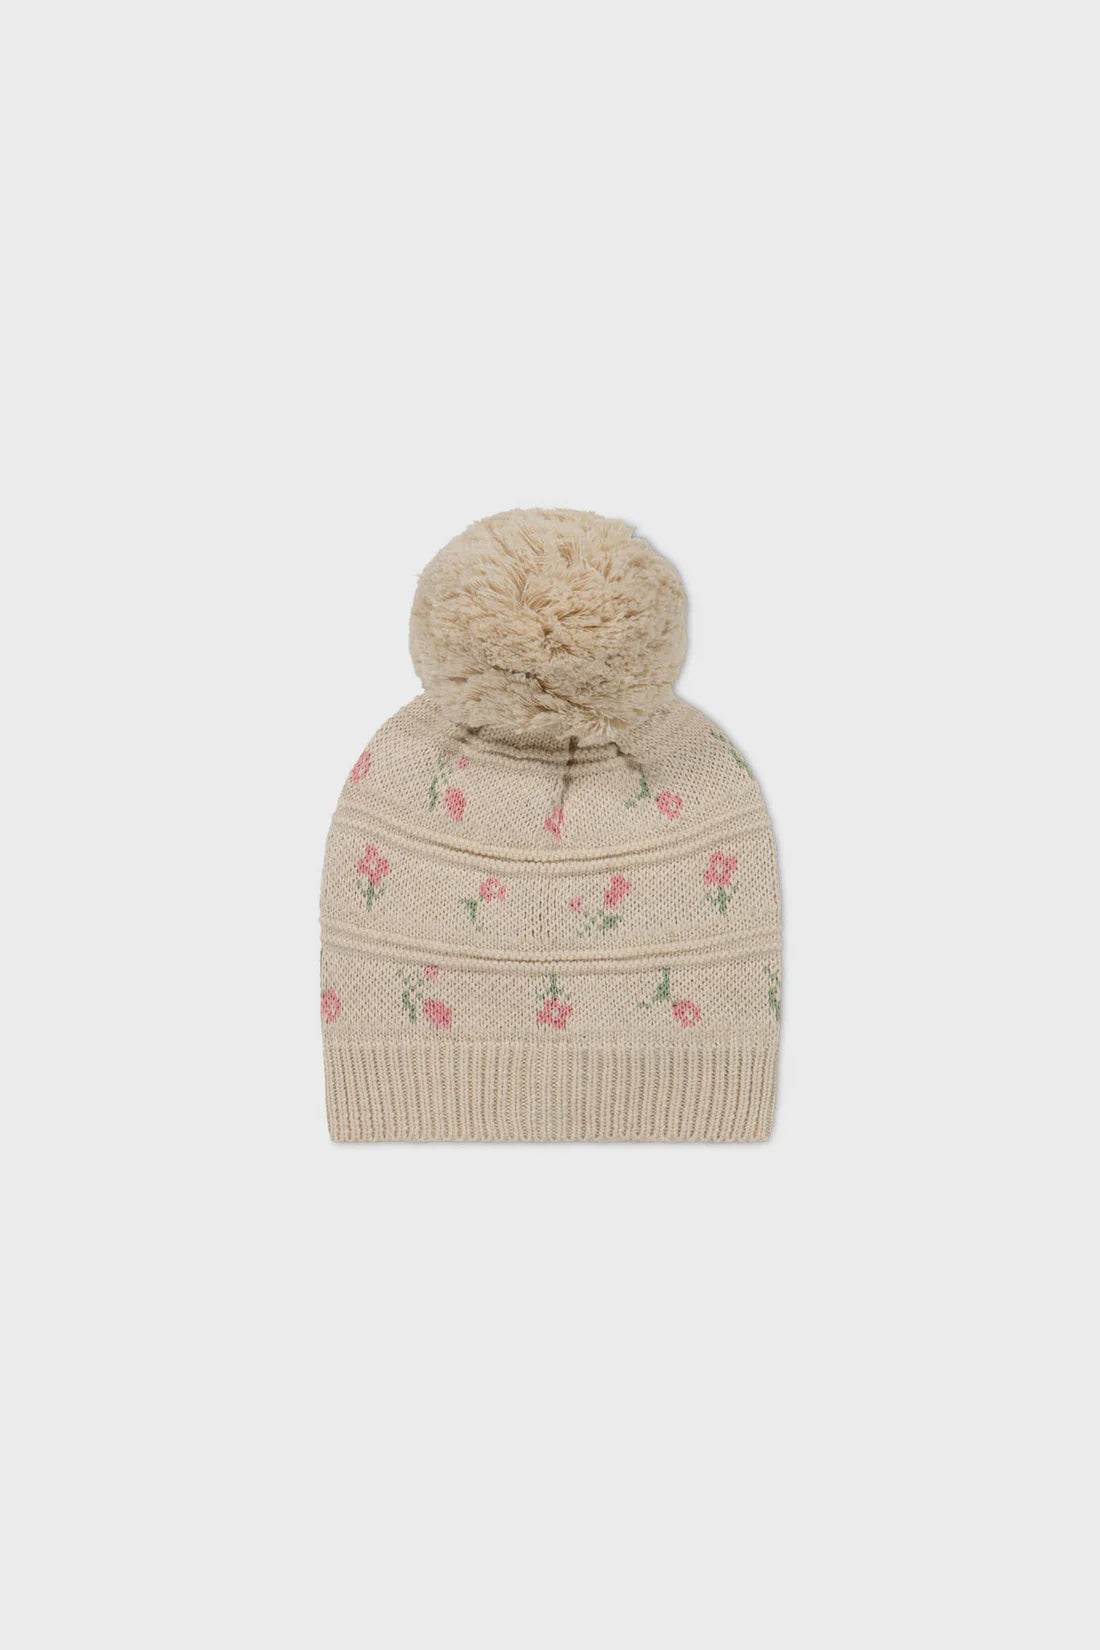 Delilah Knitted Hat - Delilah Jacquard Oatmeal Marle | Jamie Kay